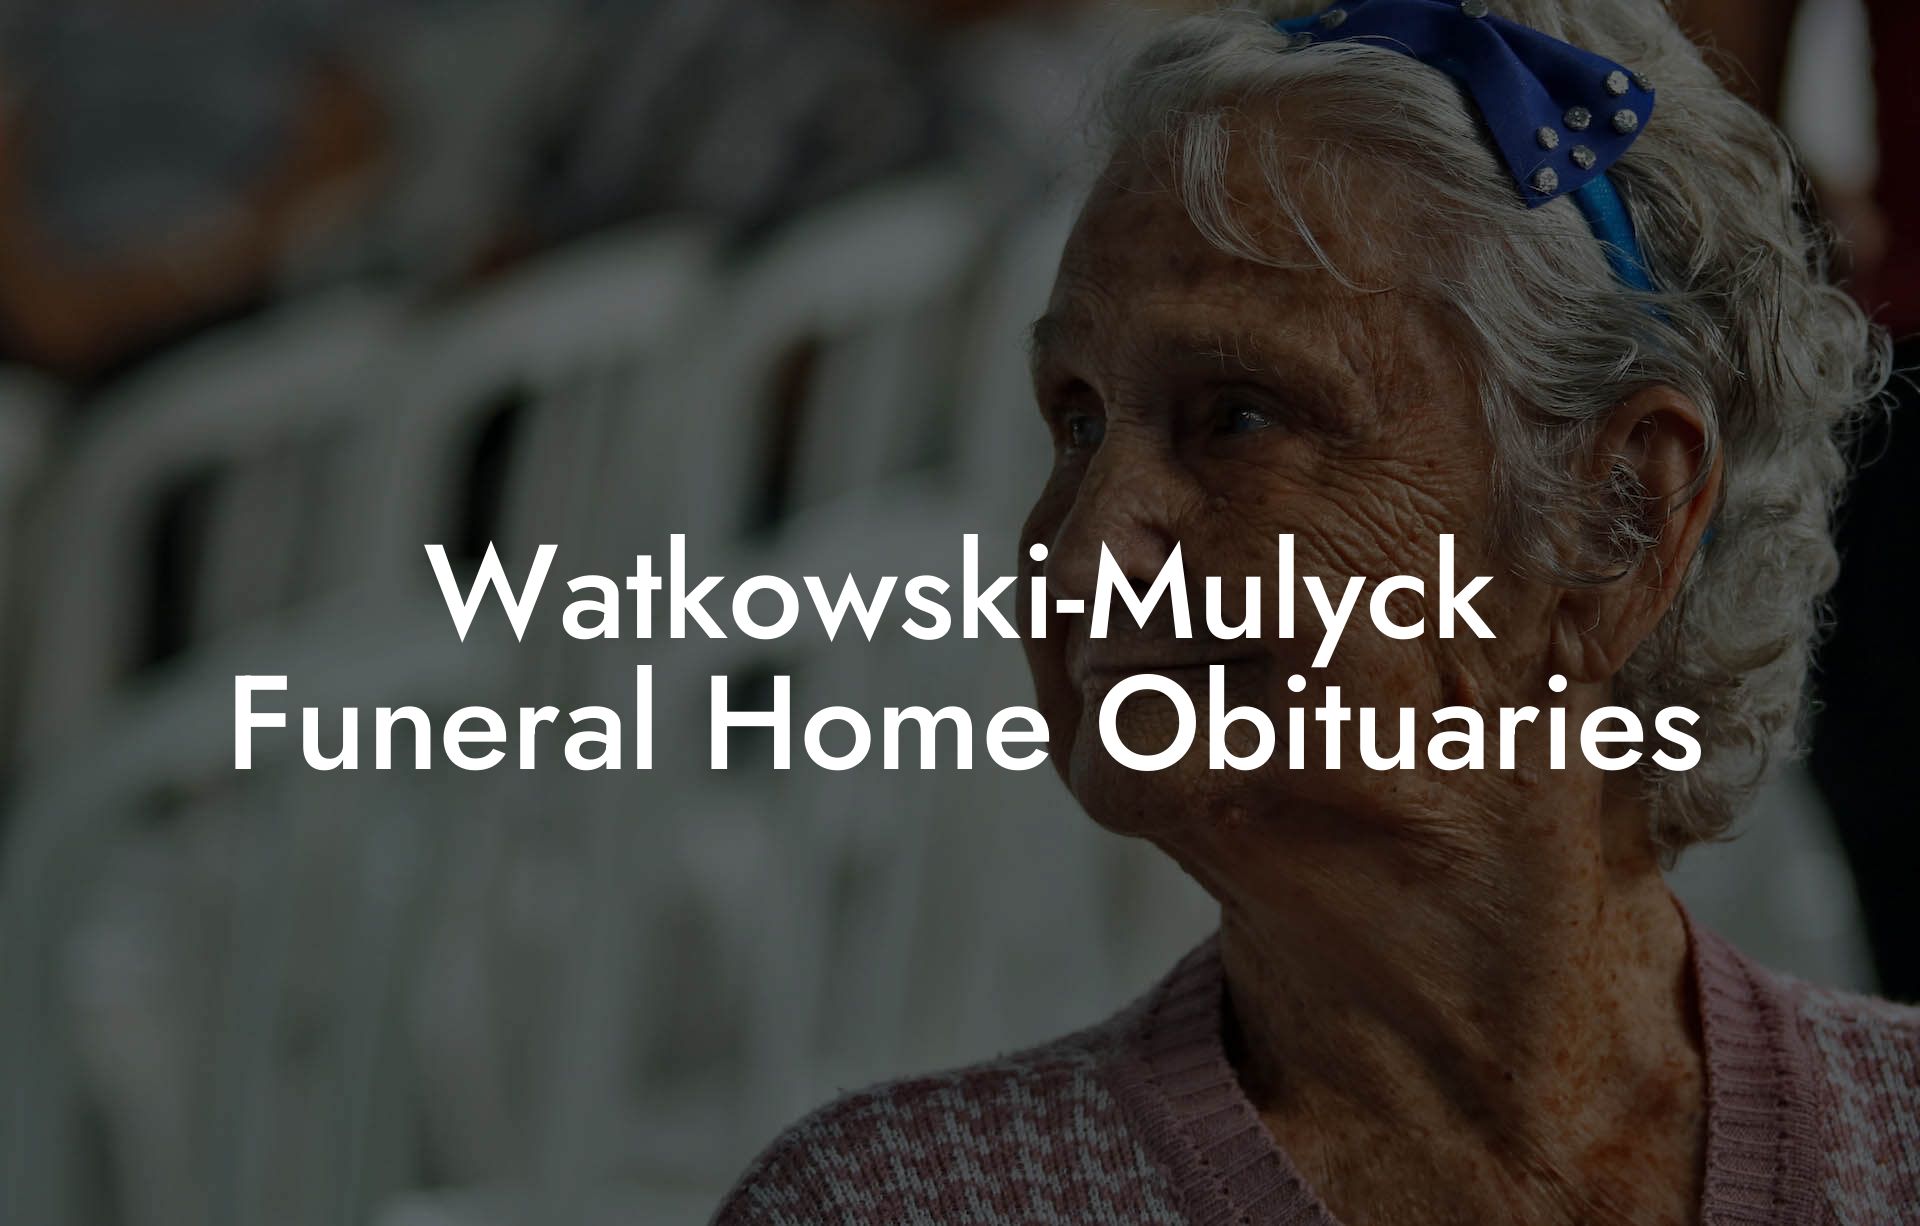 Watkowski-Mulyck Funeral Home Obituaries